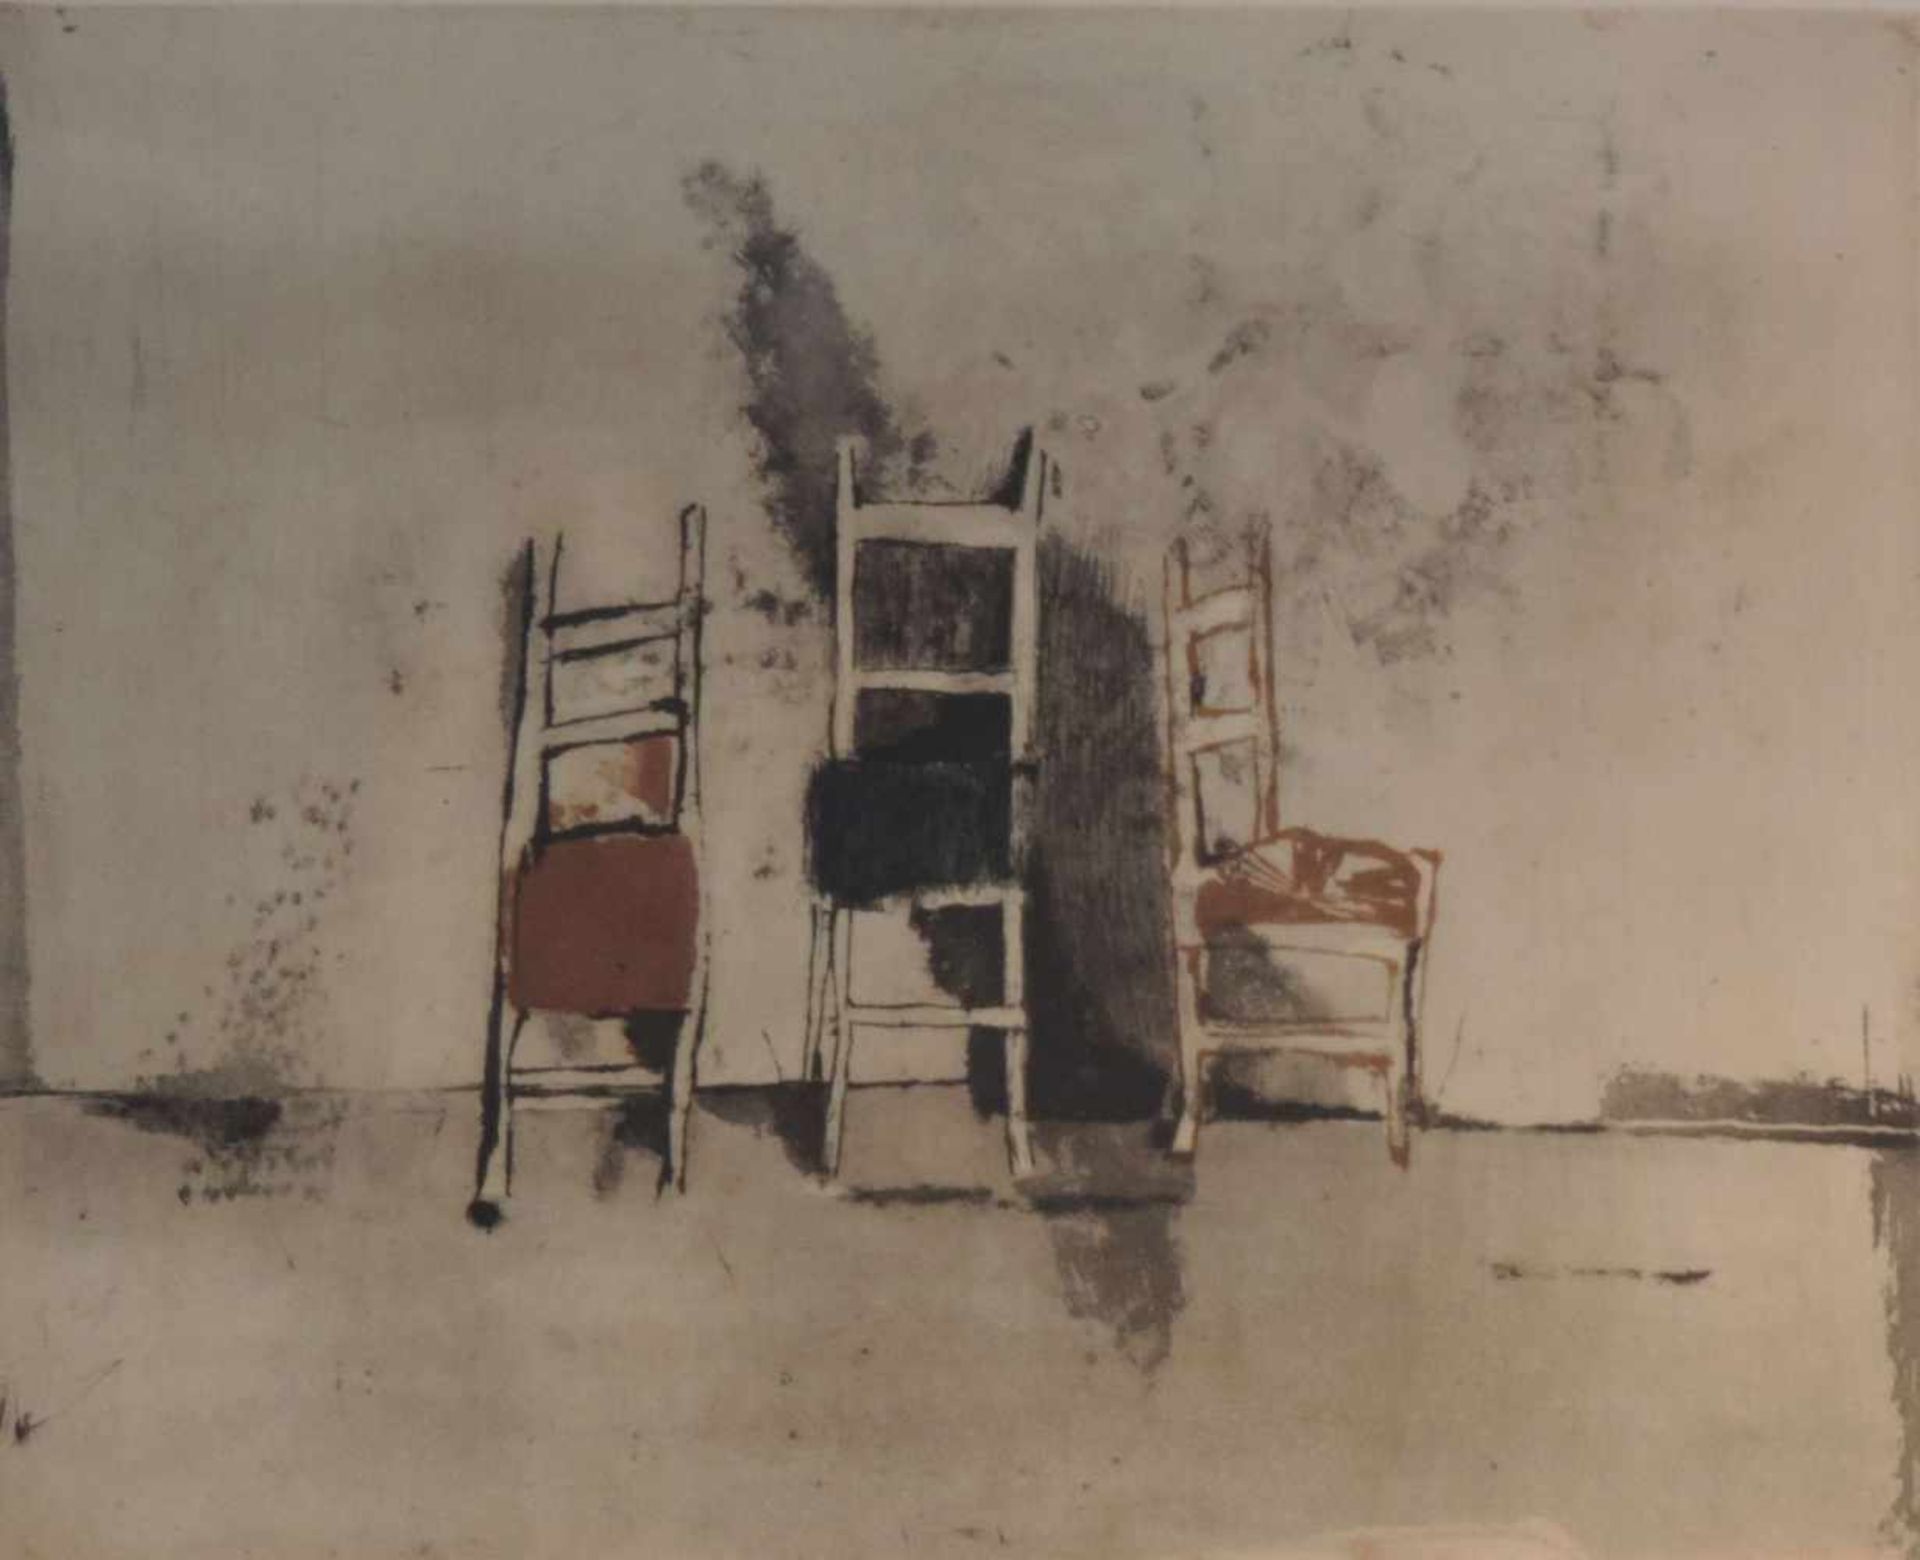 ANTONINI, Annapia, *1949 Lugano (Schweiz), stud bei Friedlaender, Farbradierung, "Due sedia e une